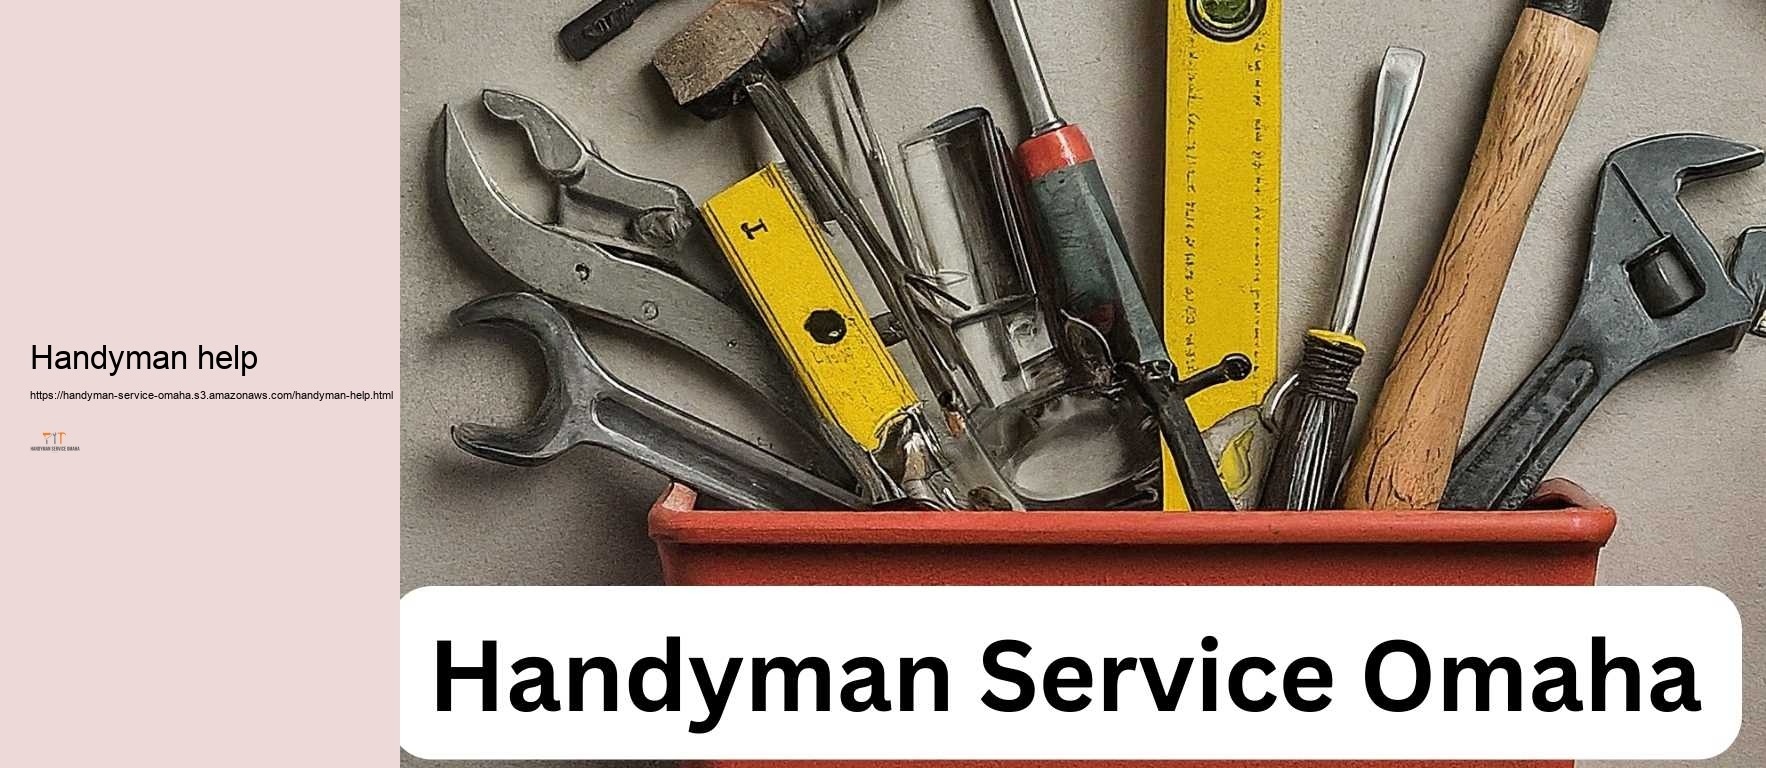 Handyman help